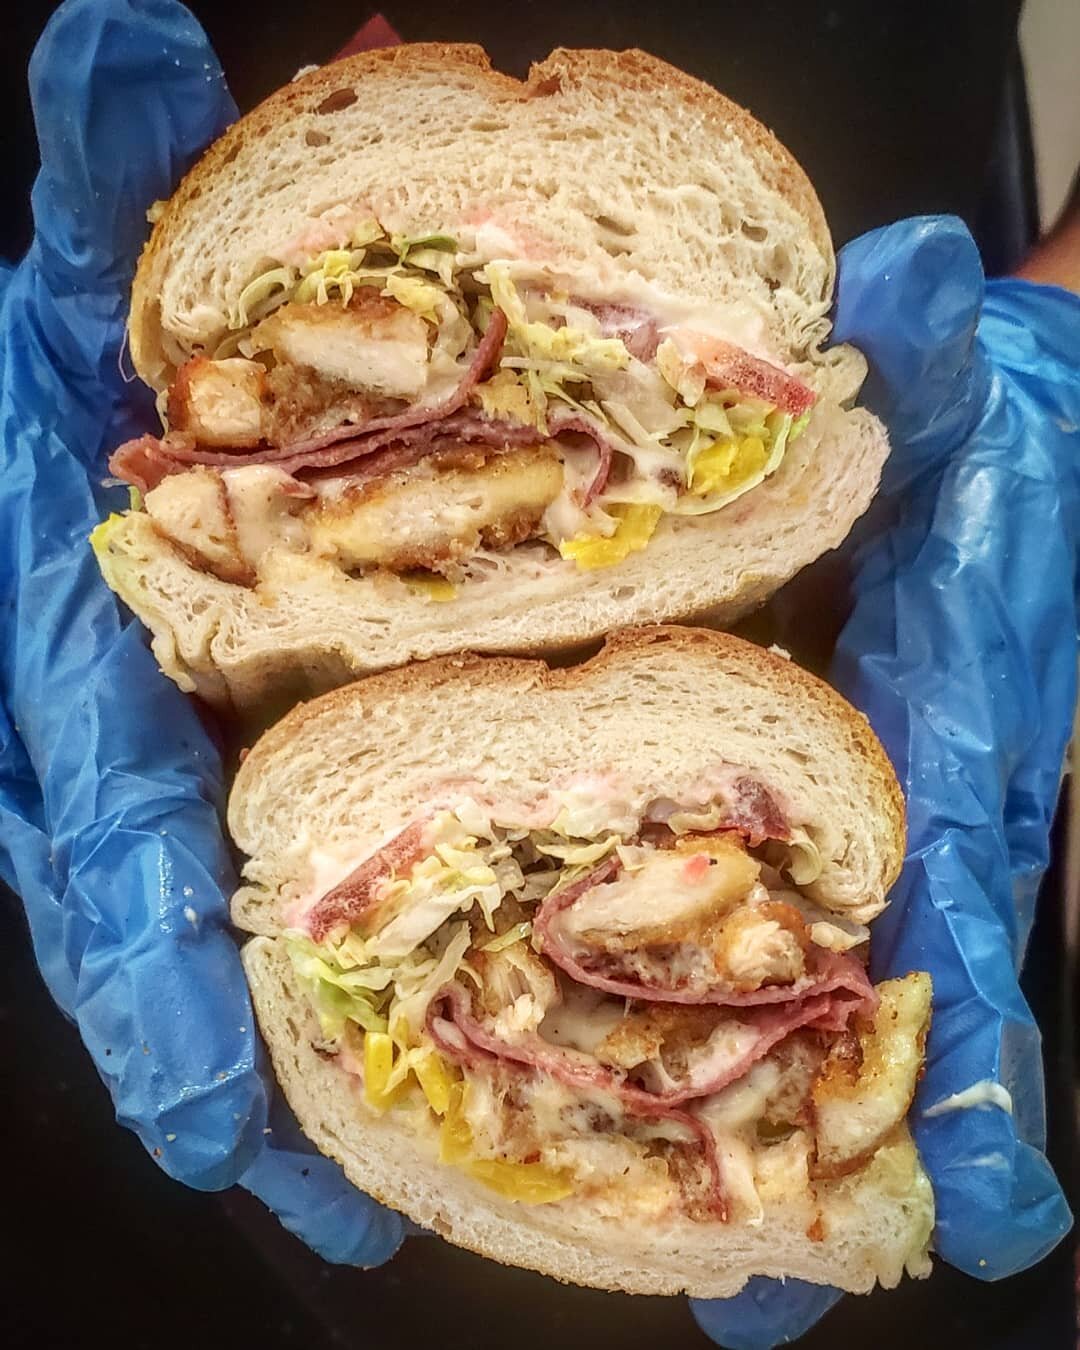 👮 SERGEANT SALAMI 👮
.
Breaded chicken, fried salami, Swiss cheese, mayo, LTO, salt, pepper, oregano, oil, vinegar, + banana peppers
.
.
.
#breadedchicken #chickensandwich #bananapeppers #salami #sub #subs #sandwich #sandwichporn #sandwichesofig #sa